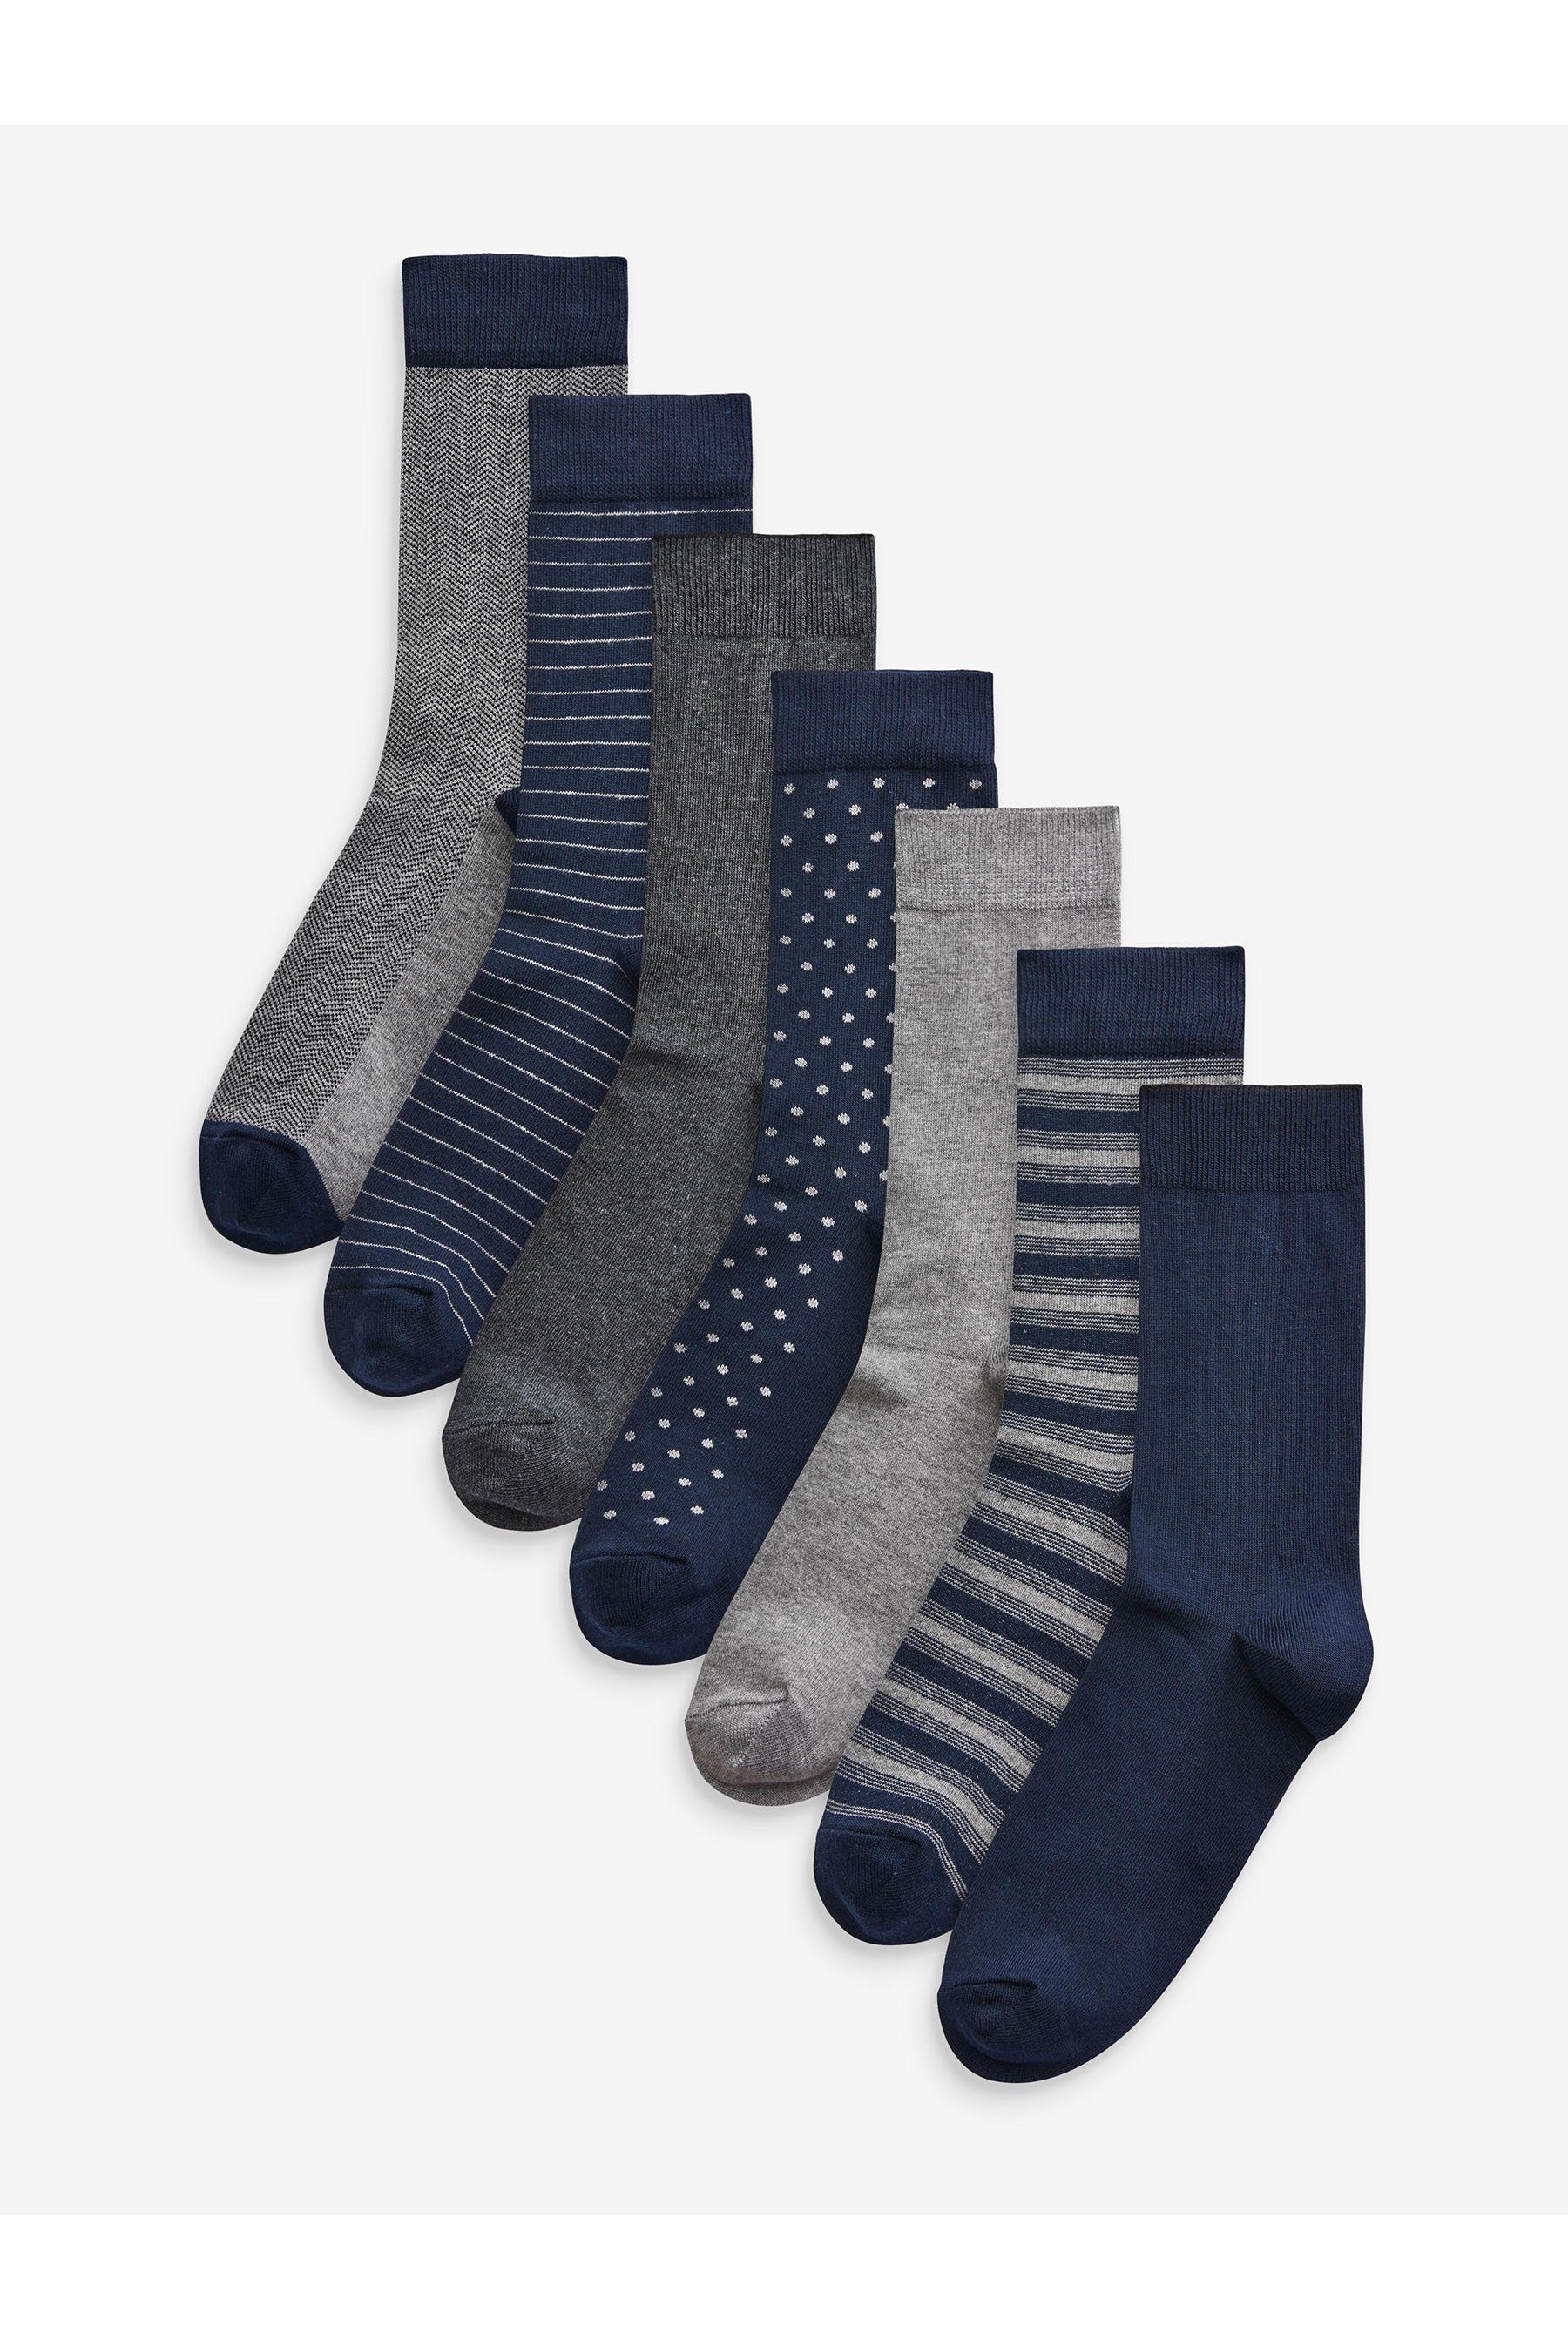 Next Kurzsocken Essential Socken im 7er-Pack (7-Paar) Navy/Grey Pattern